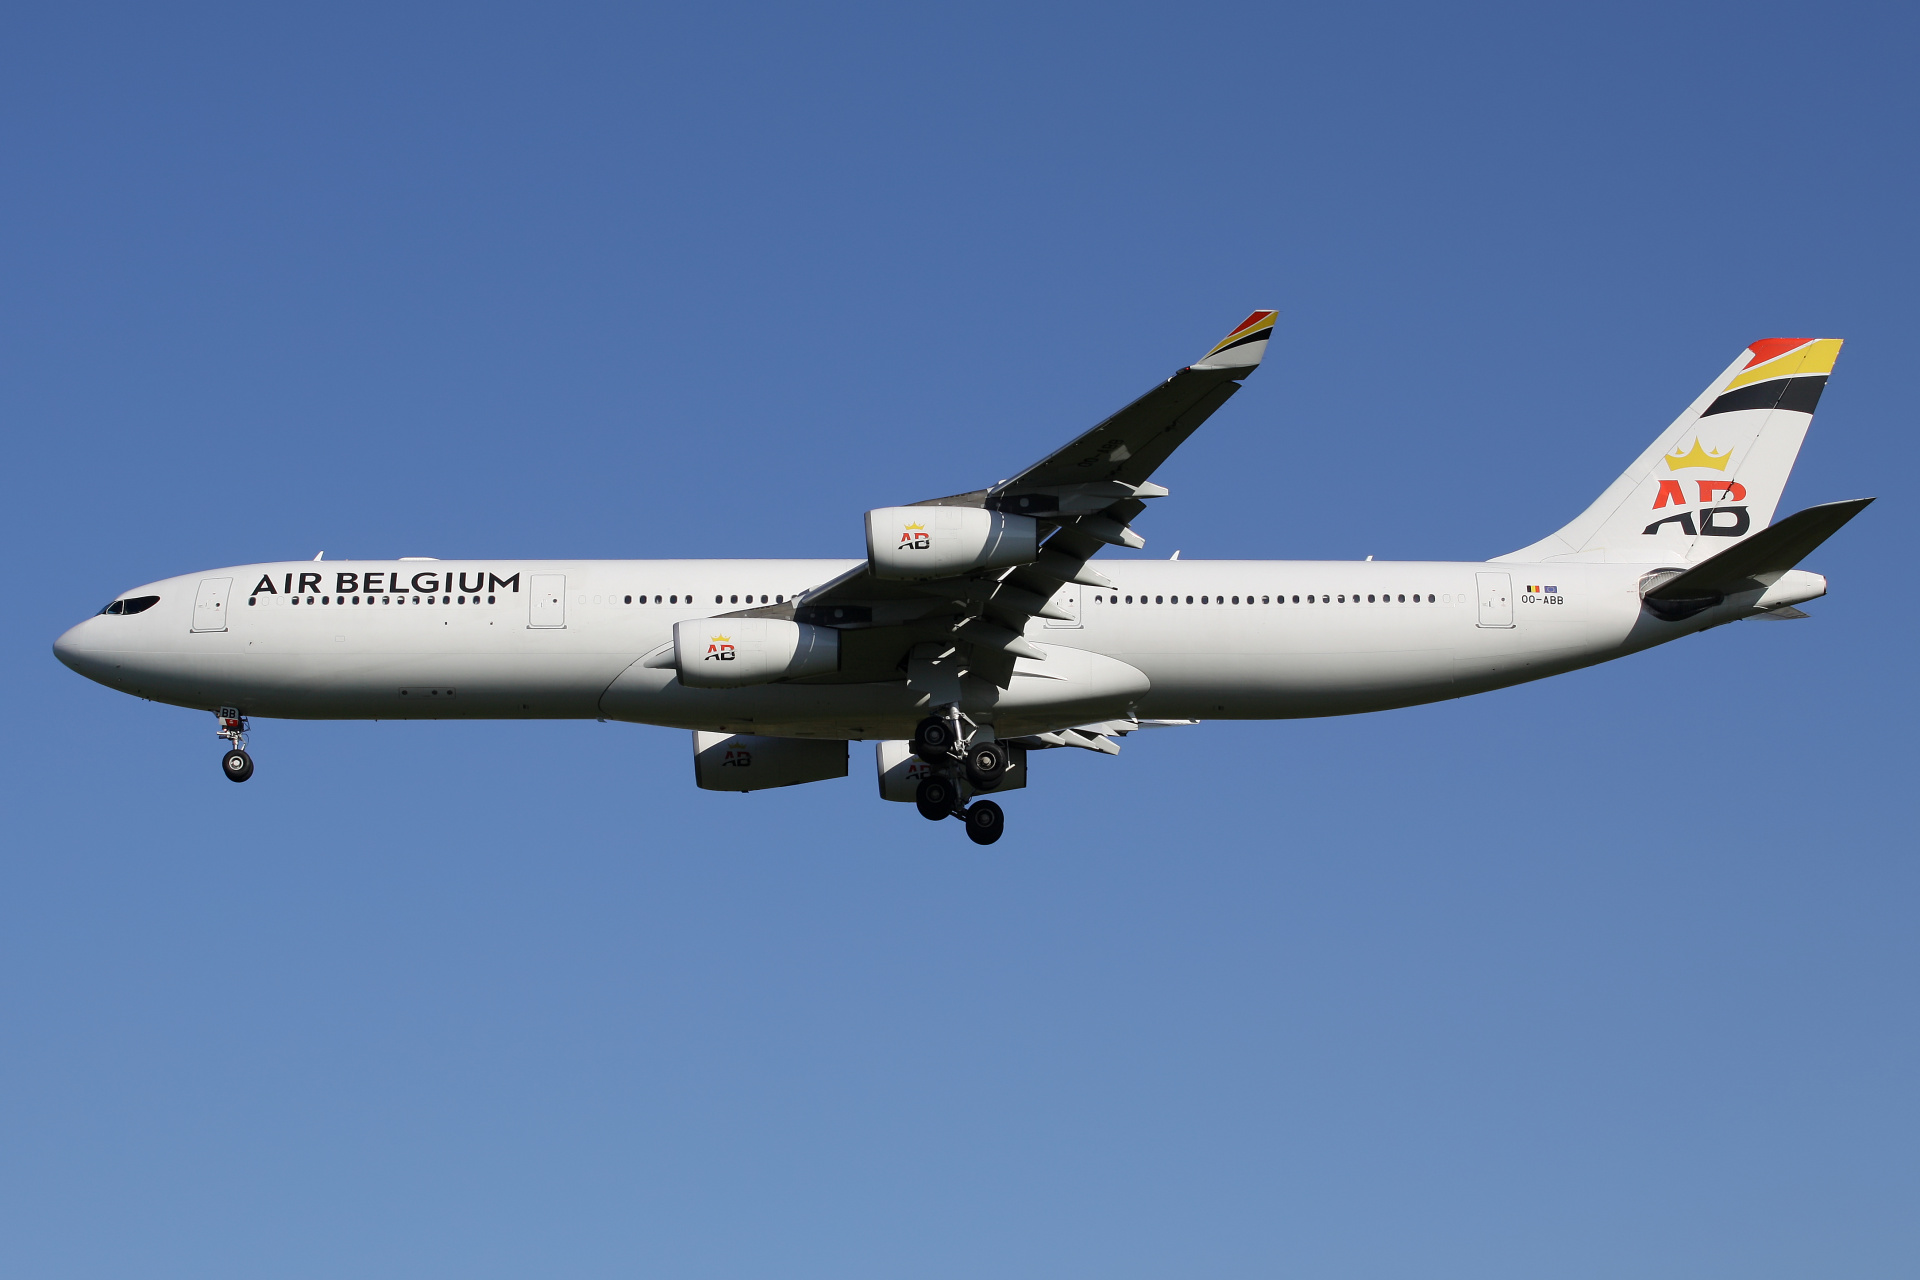 OO-ABB (Aircraft » EPWA Spotting » Airbus A340-300 » Air Belgium)